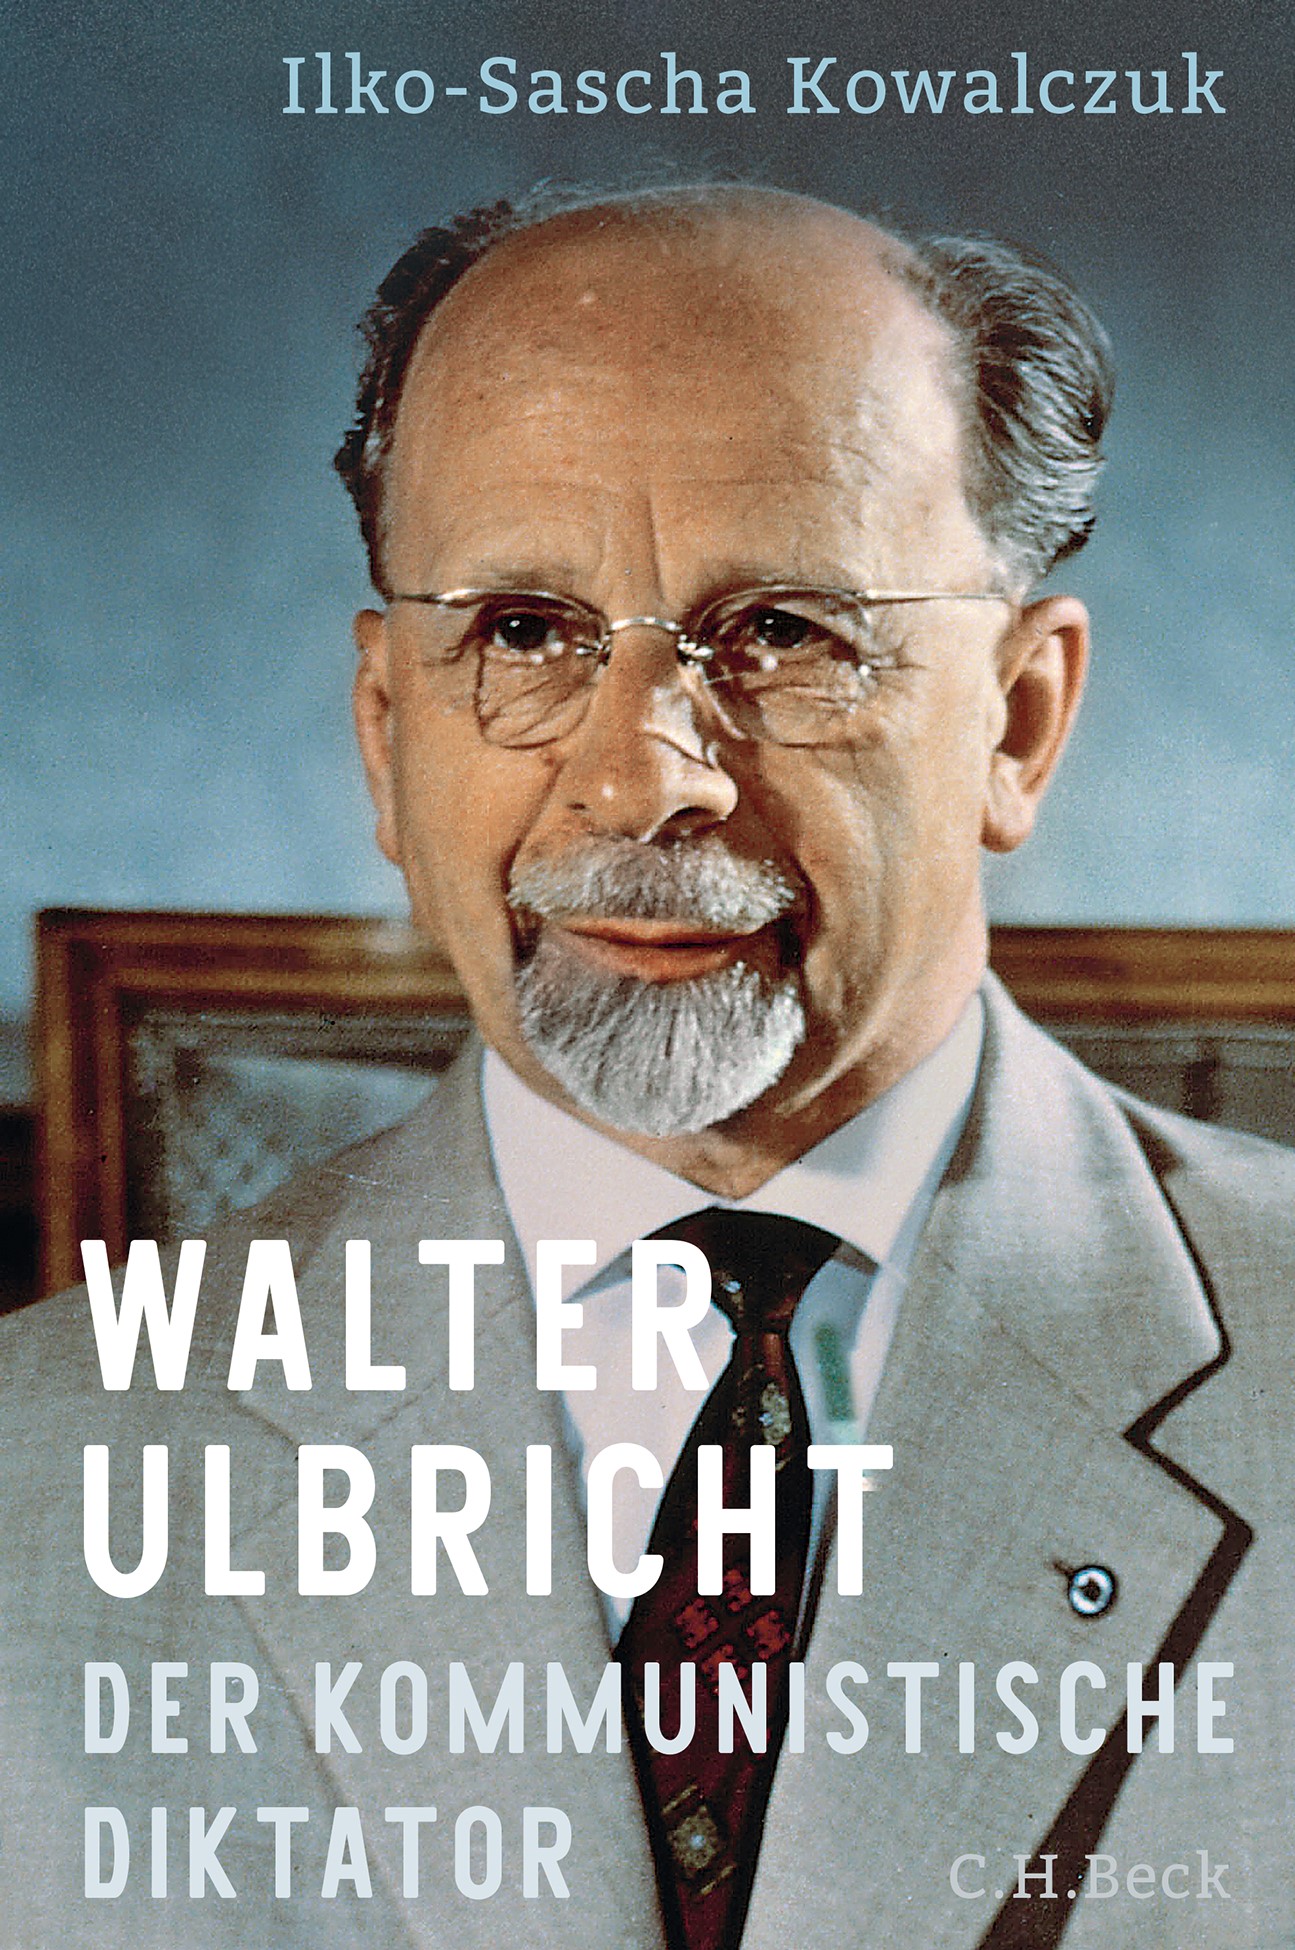 Cover: Kowalczuk, Ilko-Sascha, Walter Ulbricht